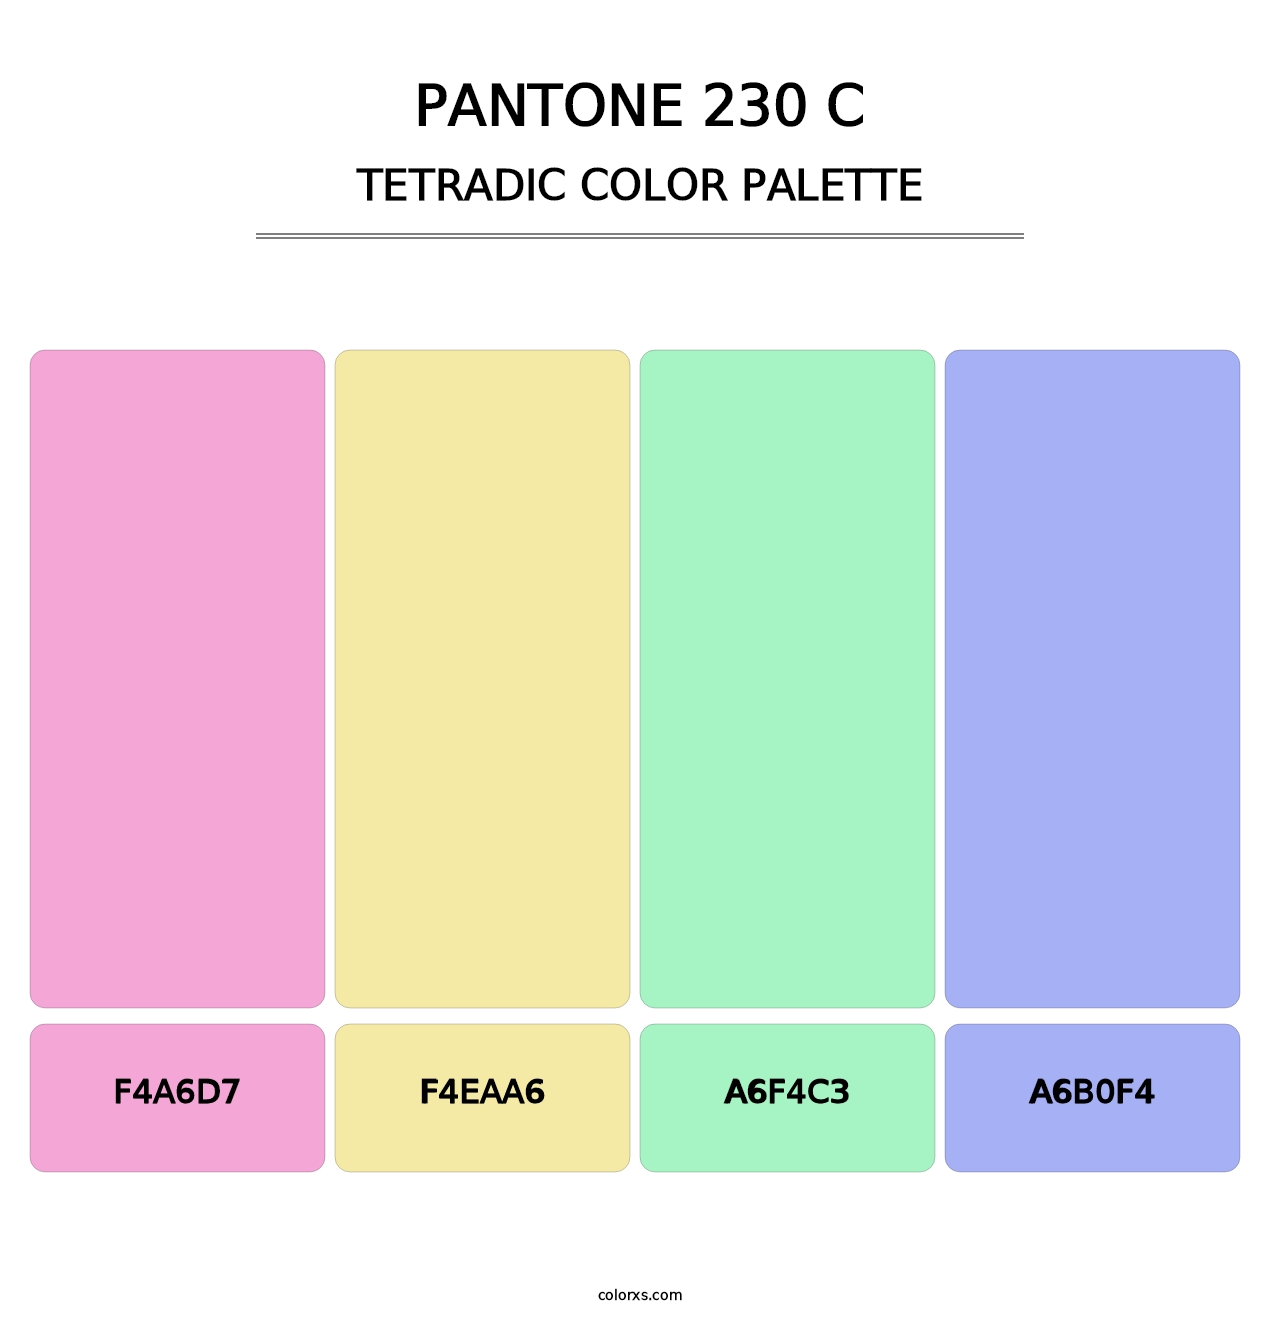 PANTONE 230 C - Tetradic Color Palette